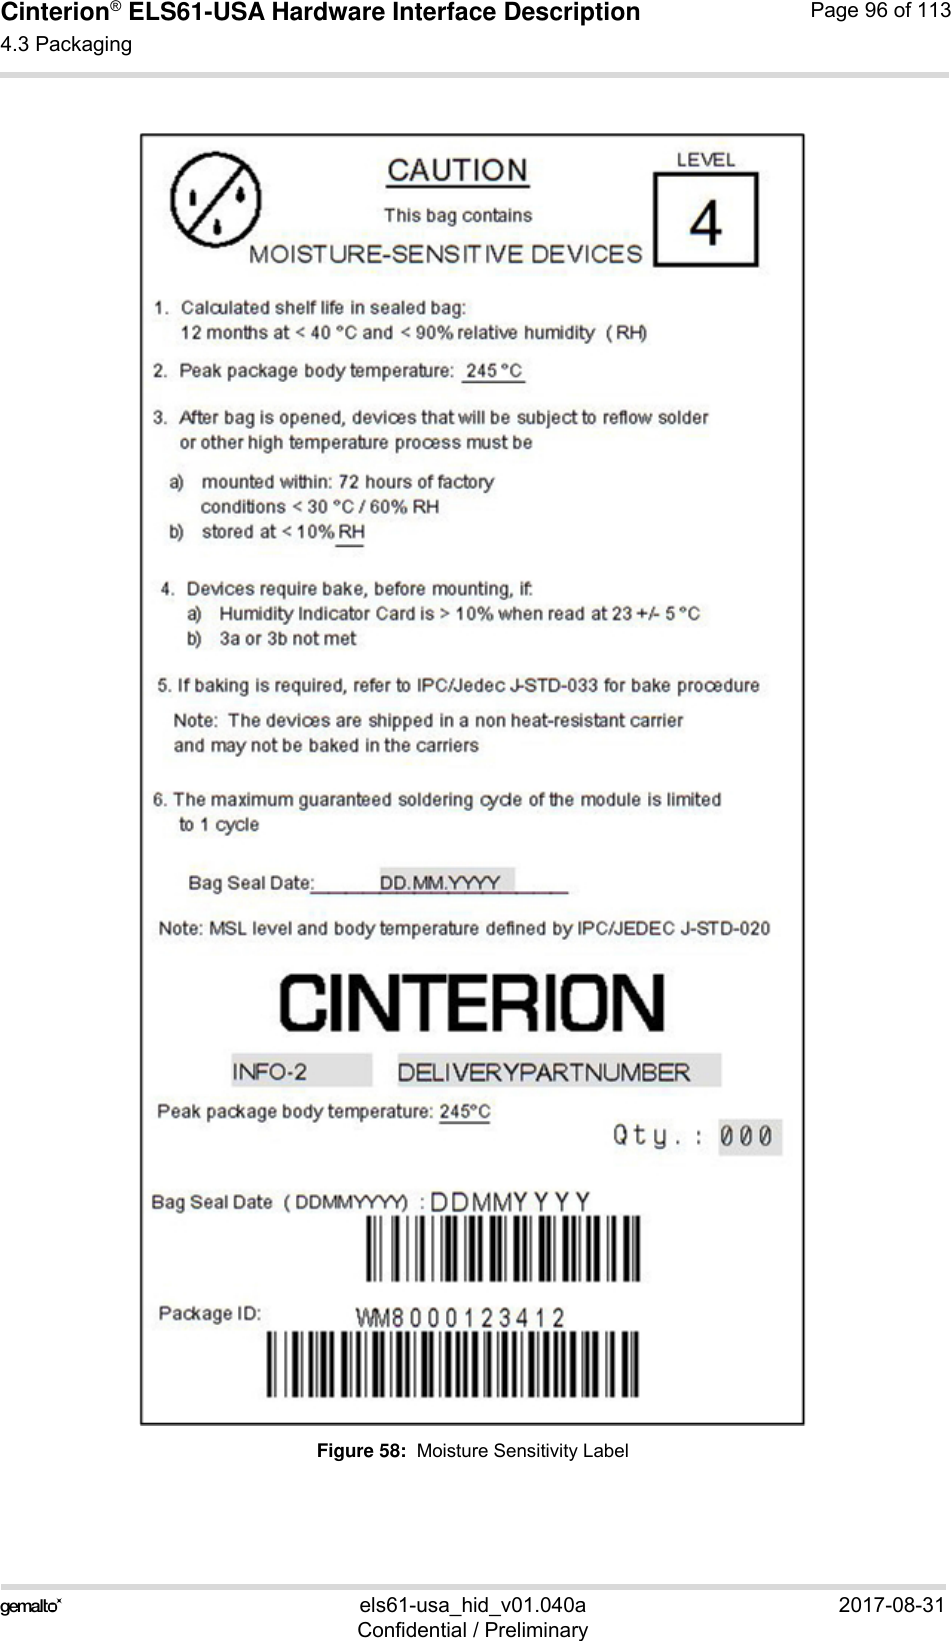 Cinterion® ELS61-USA Hardware Interface Description4.3 Packaging98els61-usa_hid_v01.040a 2017-08-31Confidential / PreliminaryPage 96 of 113Figure 58:  Moisture Sensitivity Label